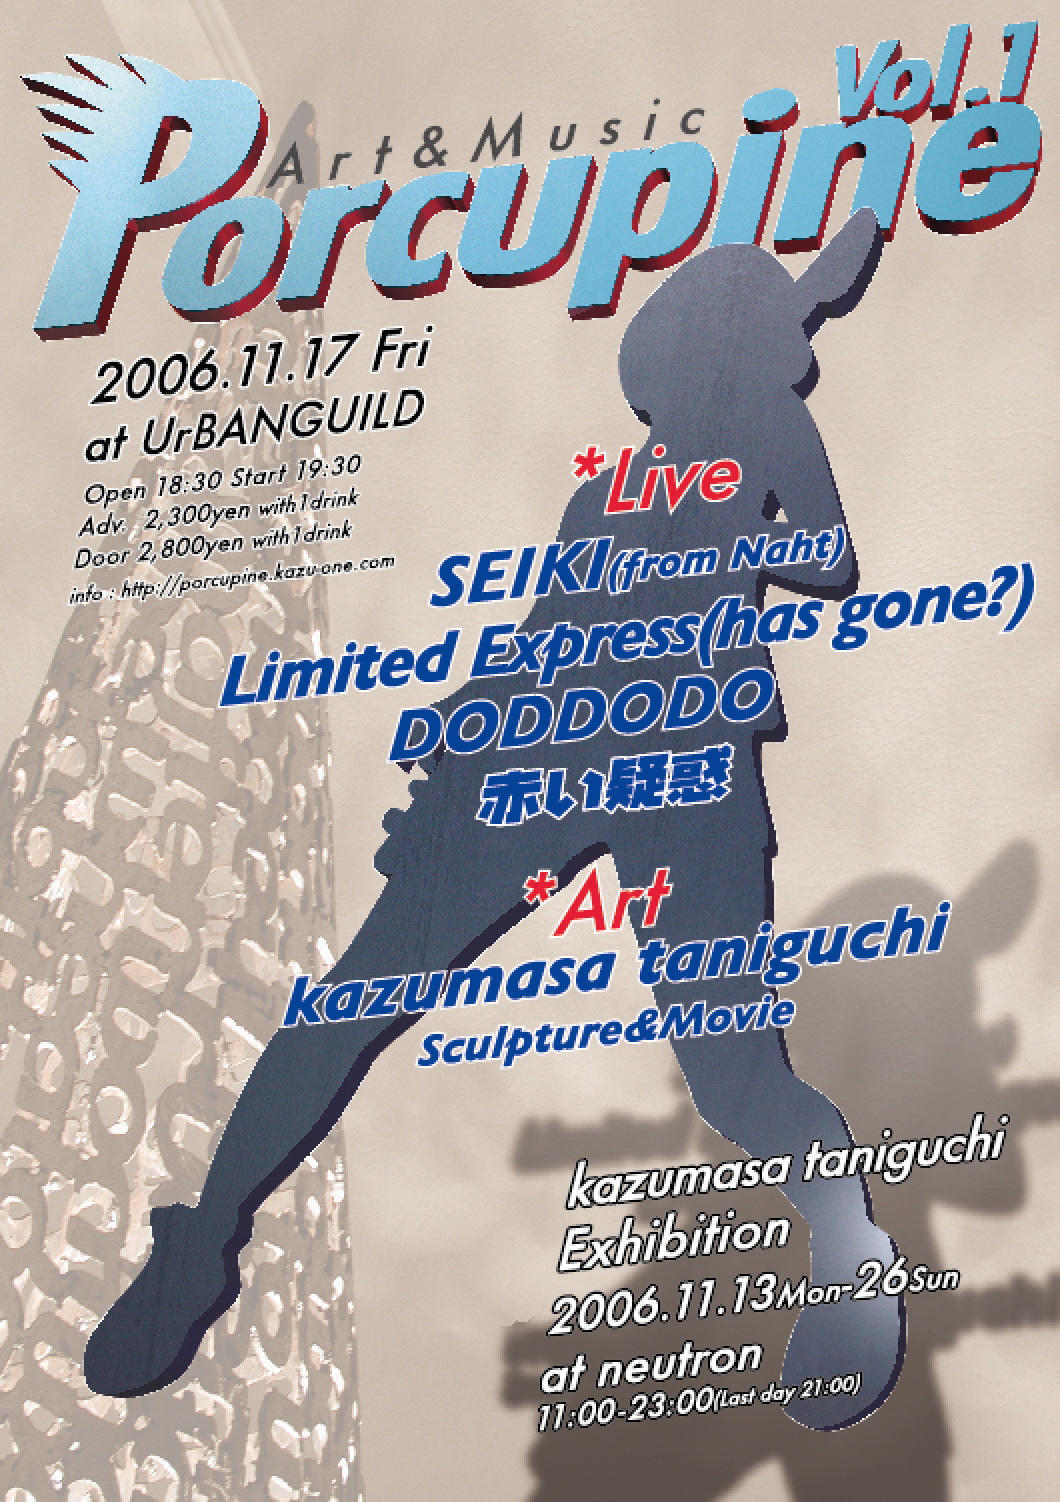 Art & Music Porcupine Vol1